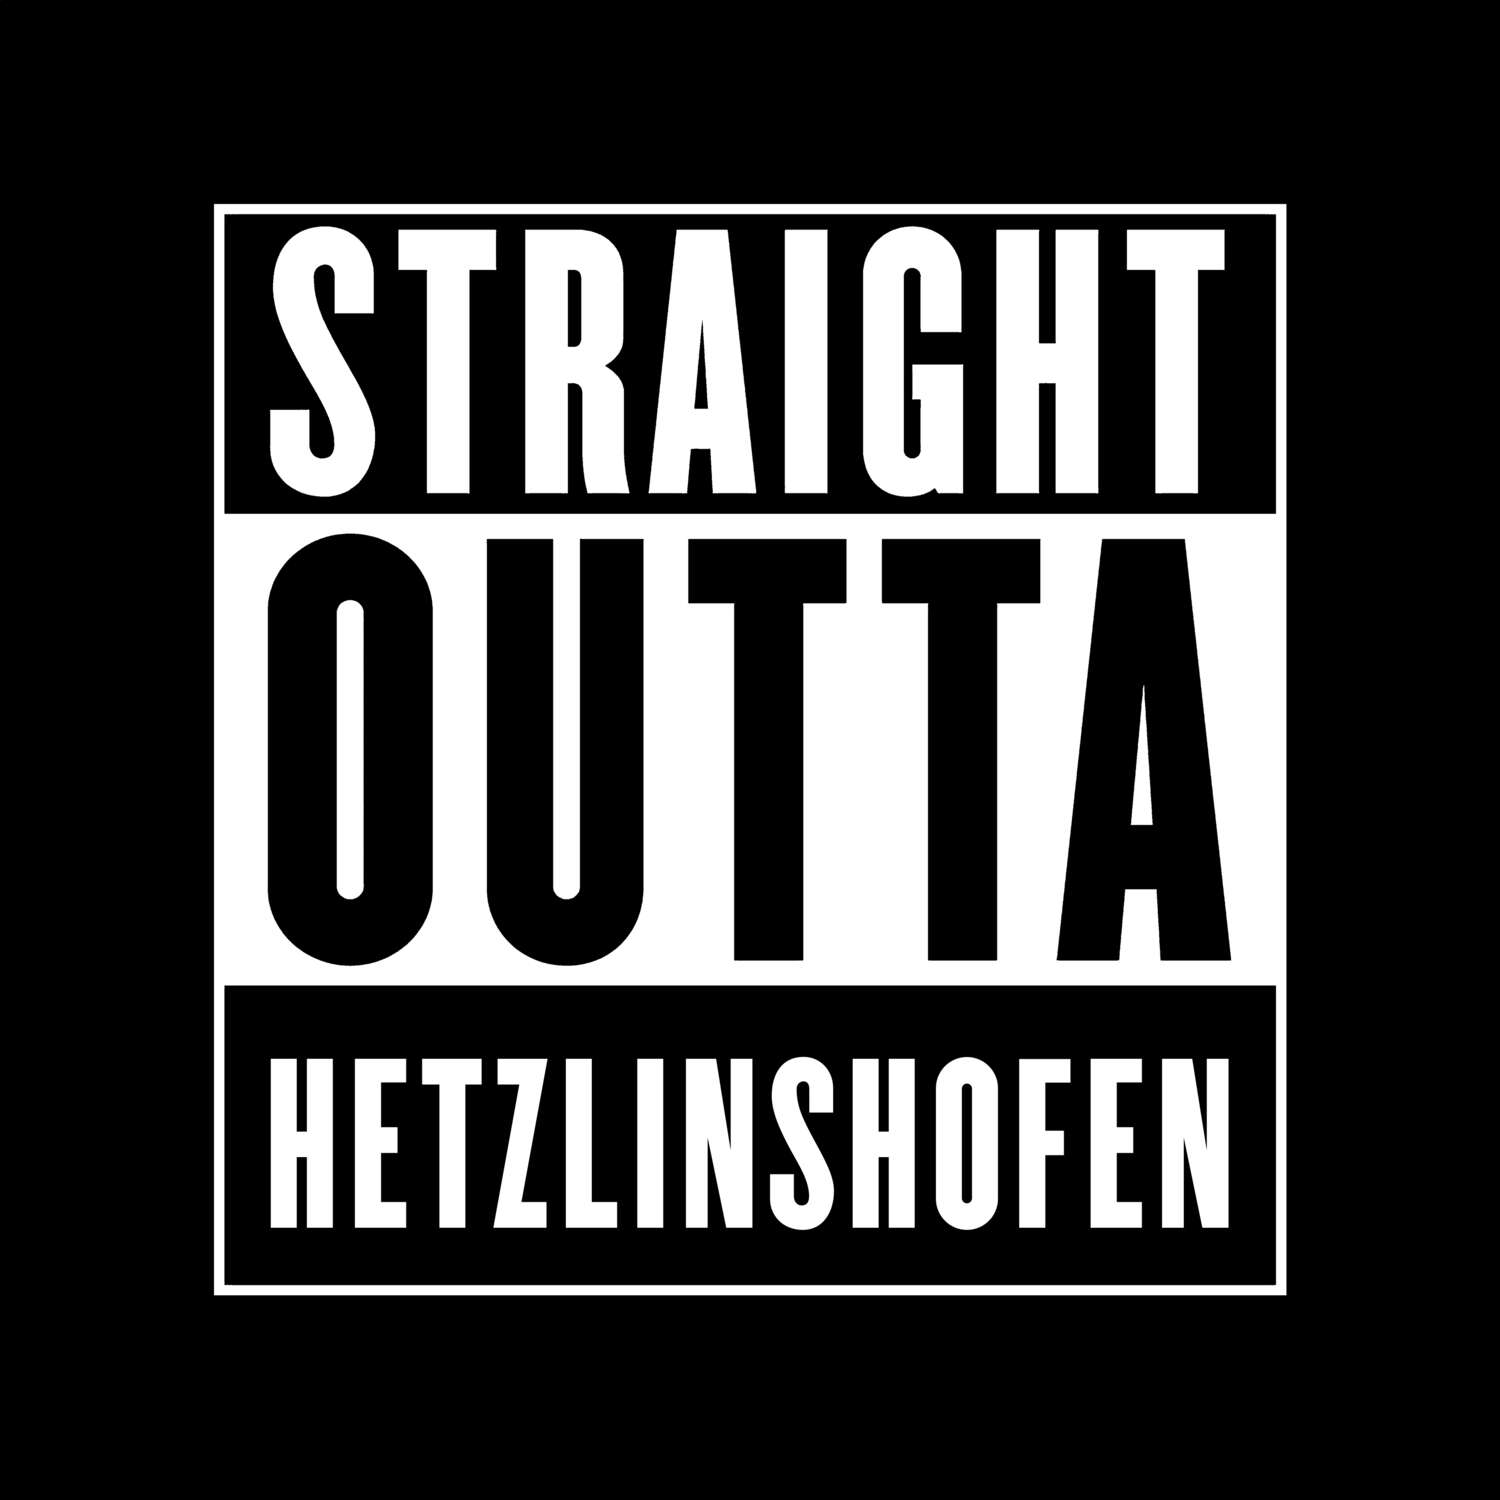 Hetzlinshofen T-Shirt »Straight Outta«